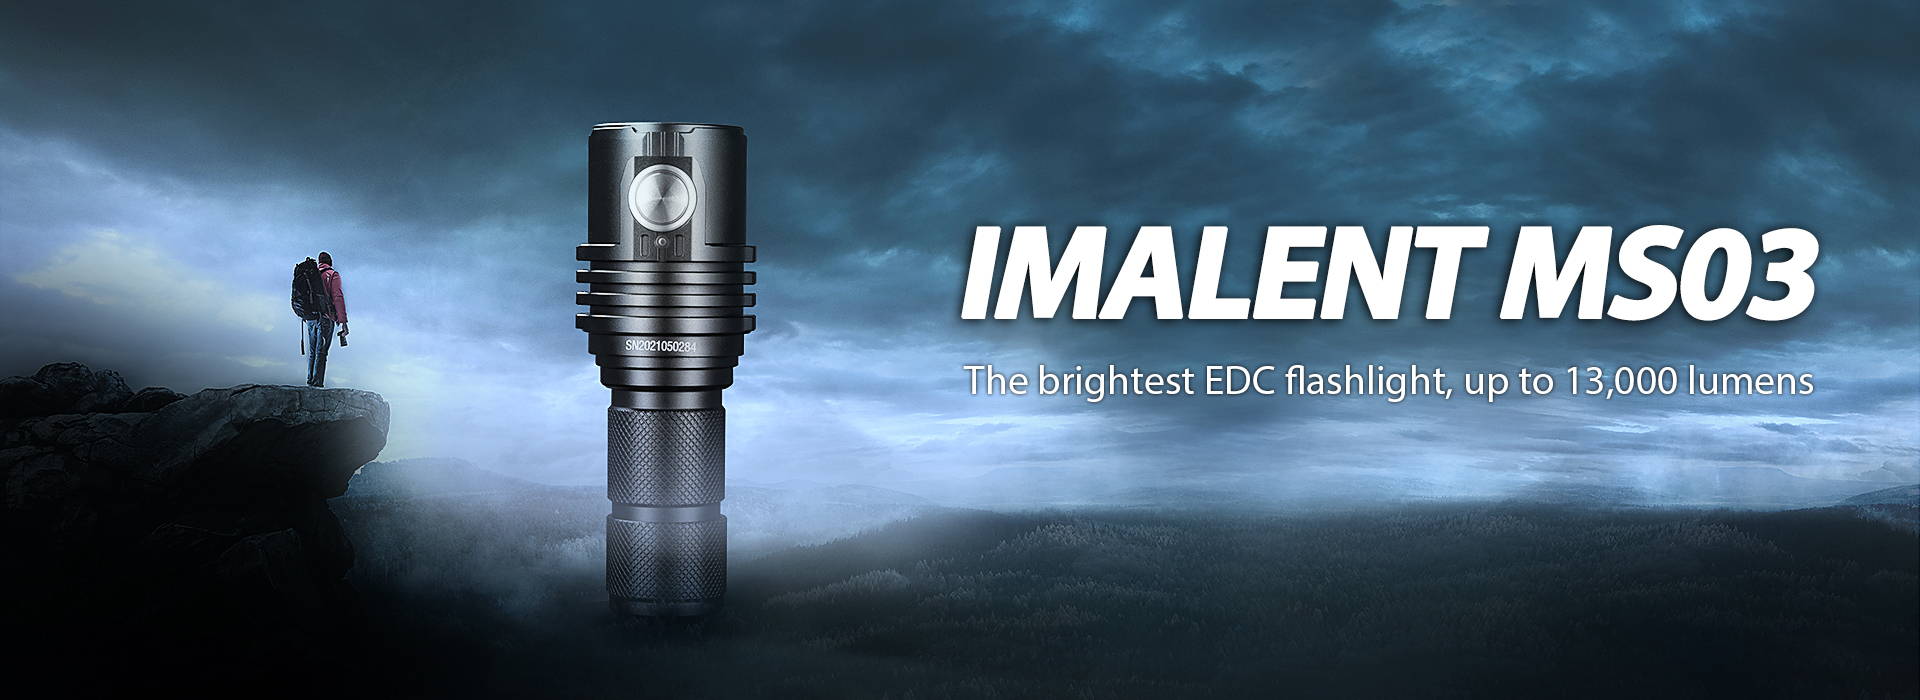 imalent ms03 brightest edc flashlight